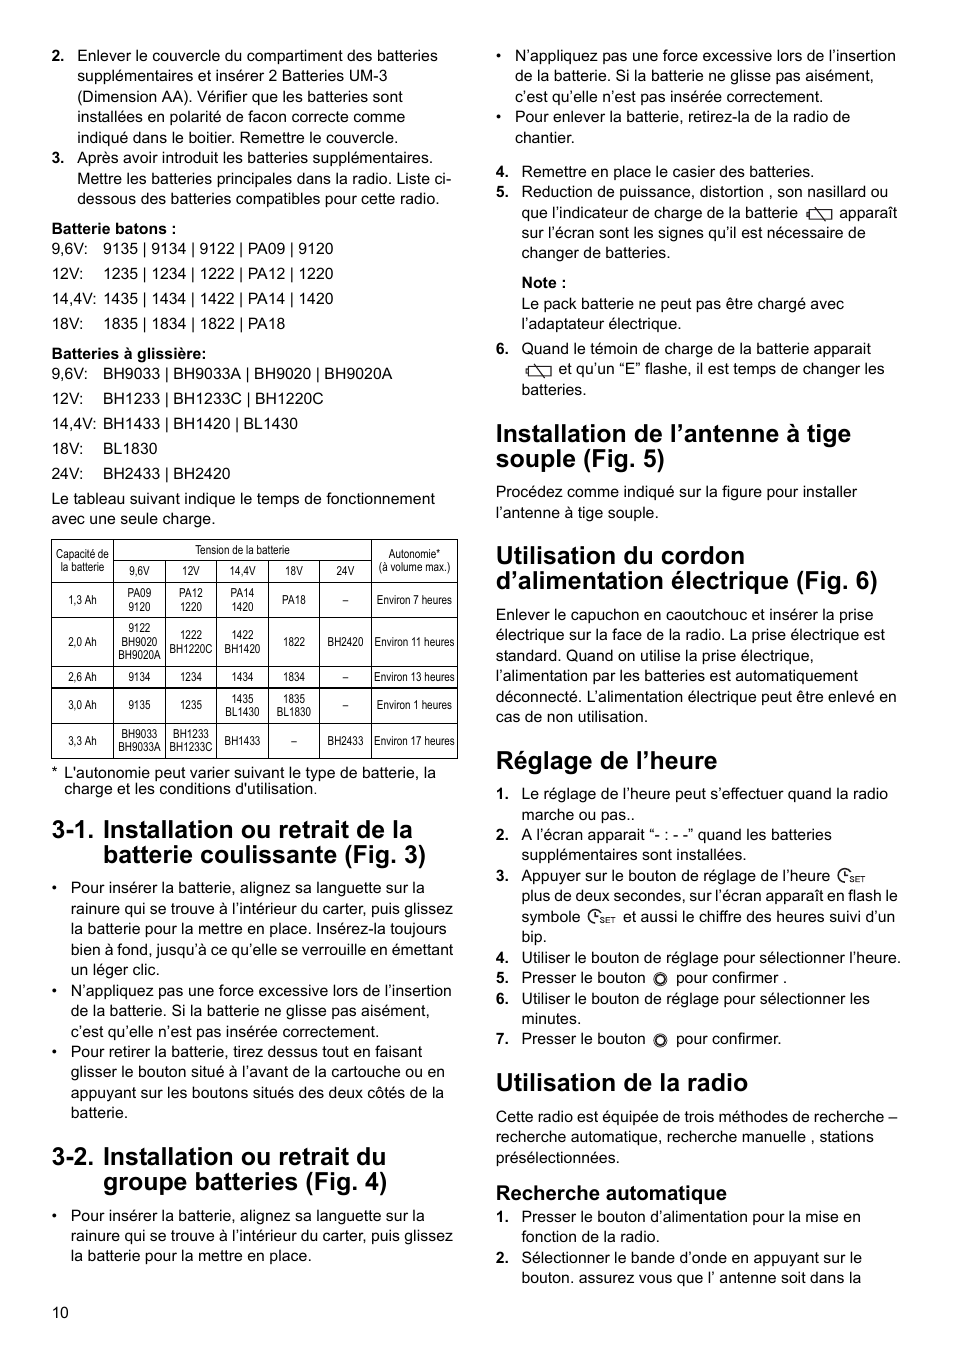 Installation de l'antenne à tige souple (fig. 5), Réglage de l'heure,  Utilisation de la radio | Makita BMR100 User Manual | Page 10 / 20 |  Original mode